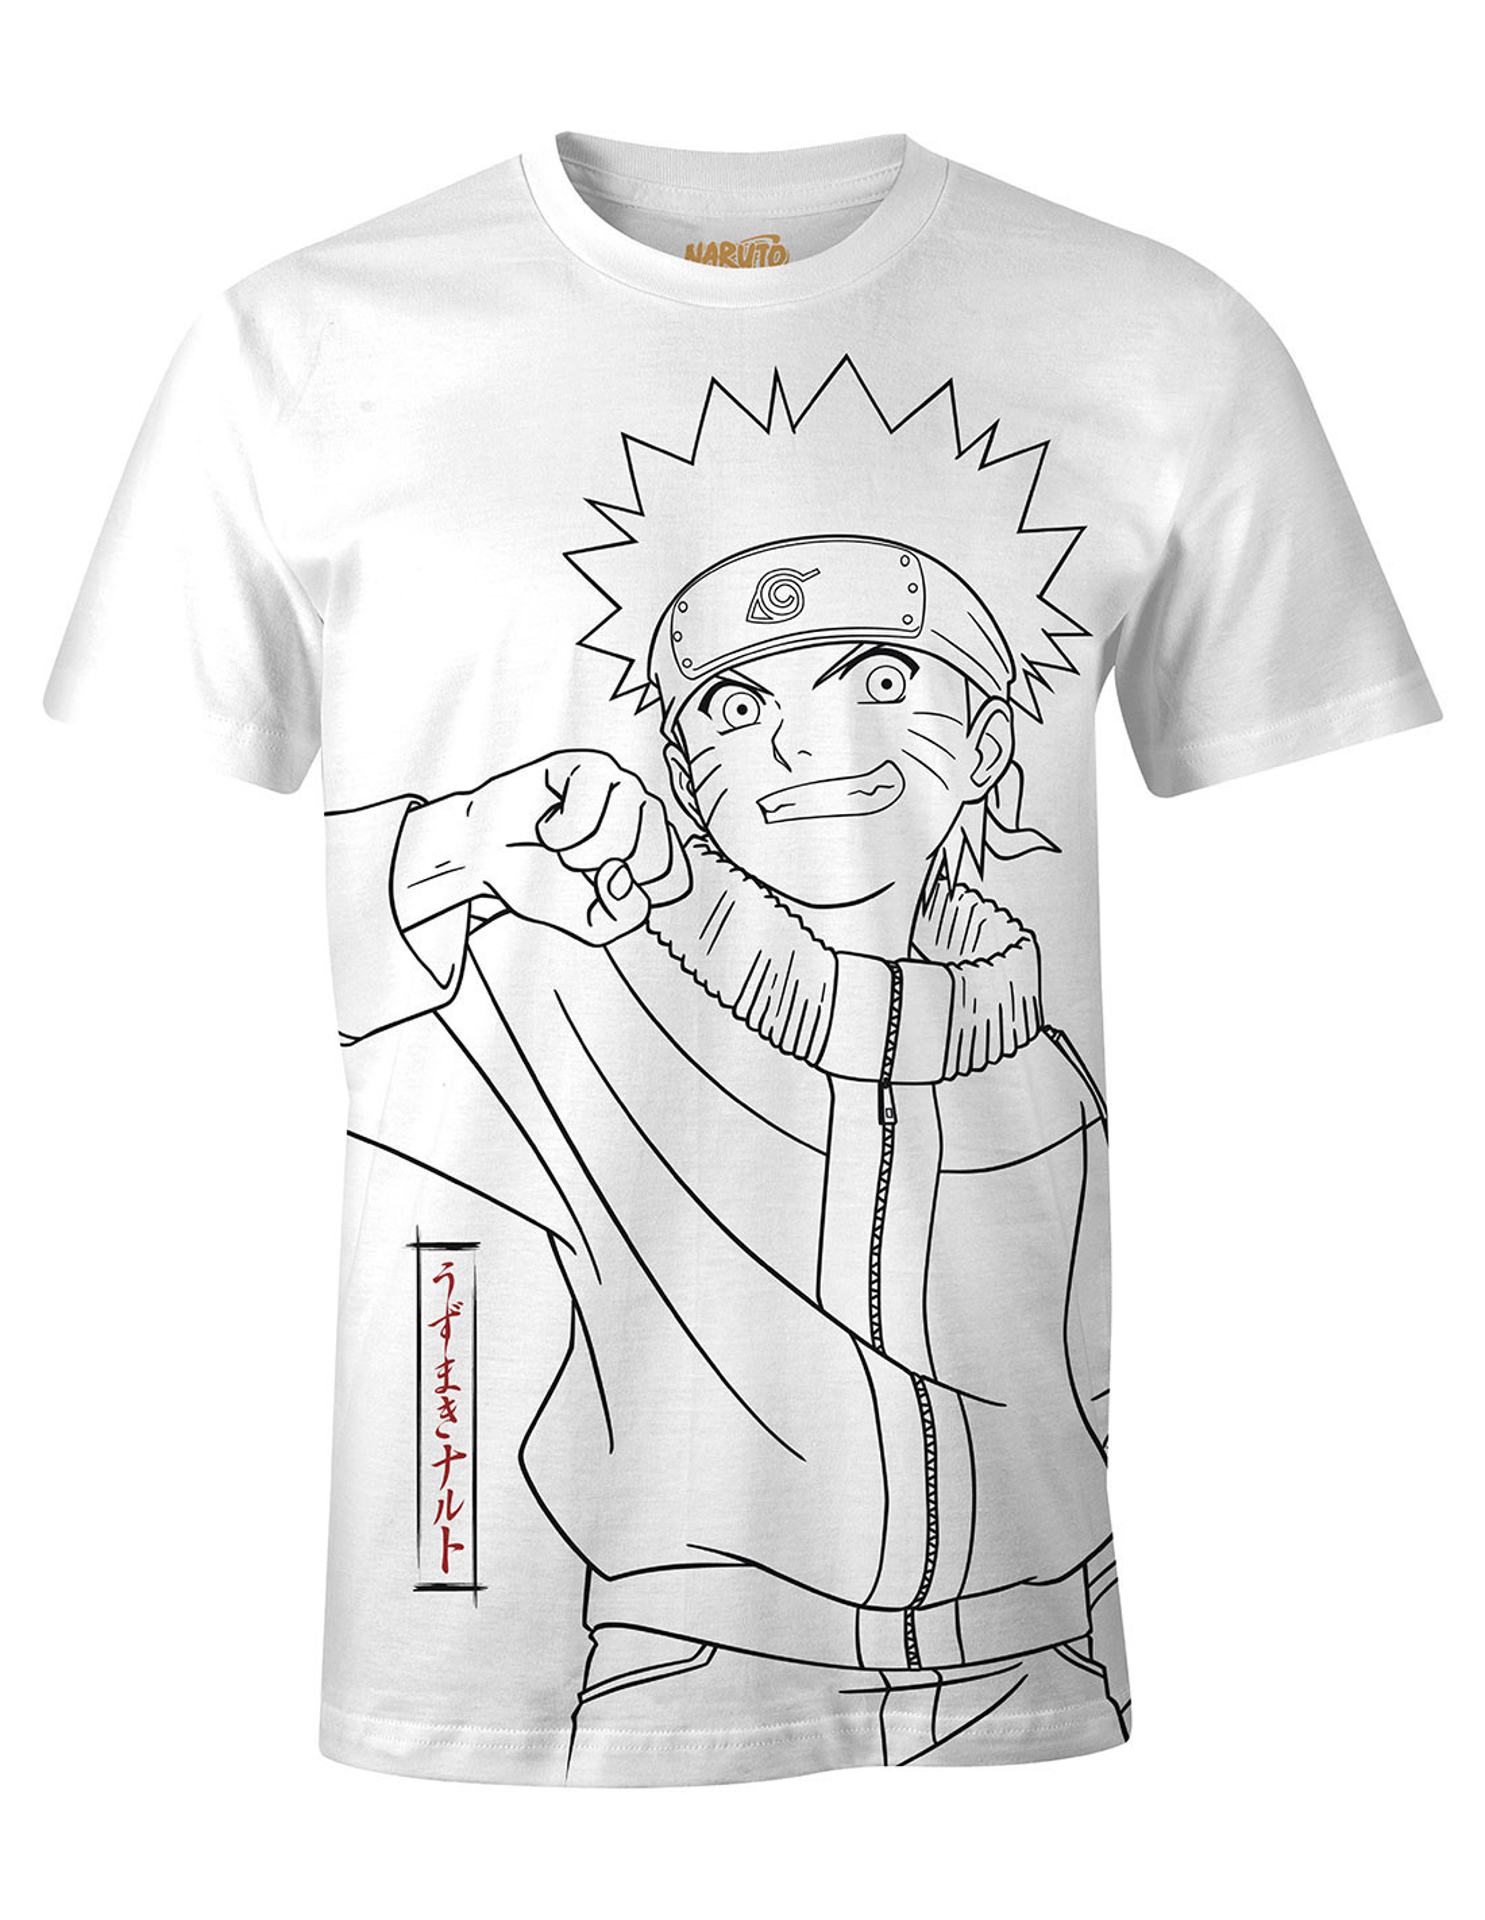 Naruto - T-shirt Blanc "Japanese Art" - M